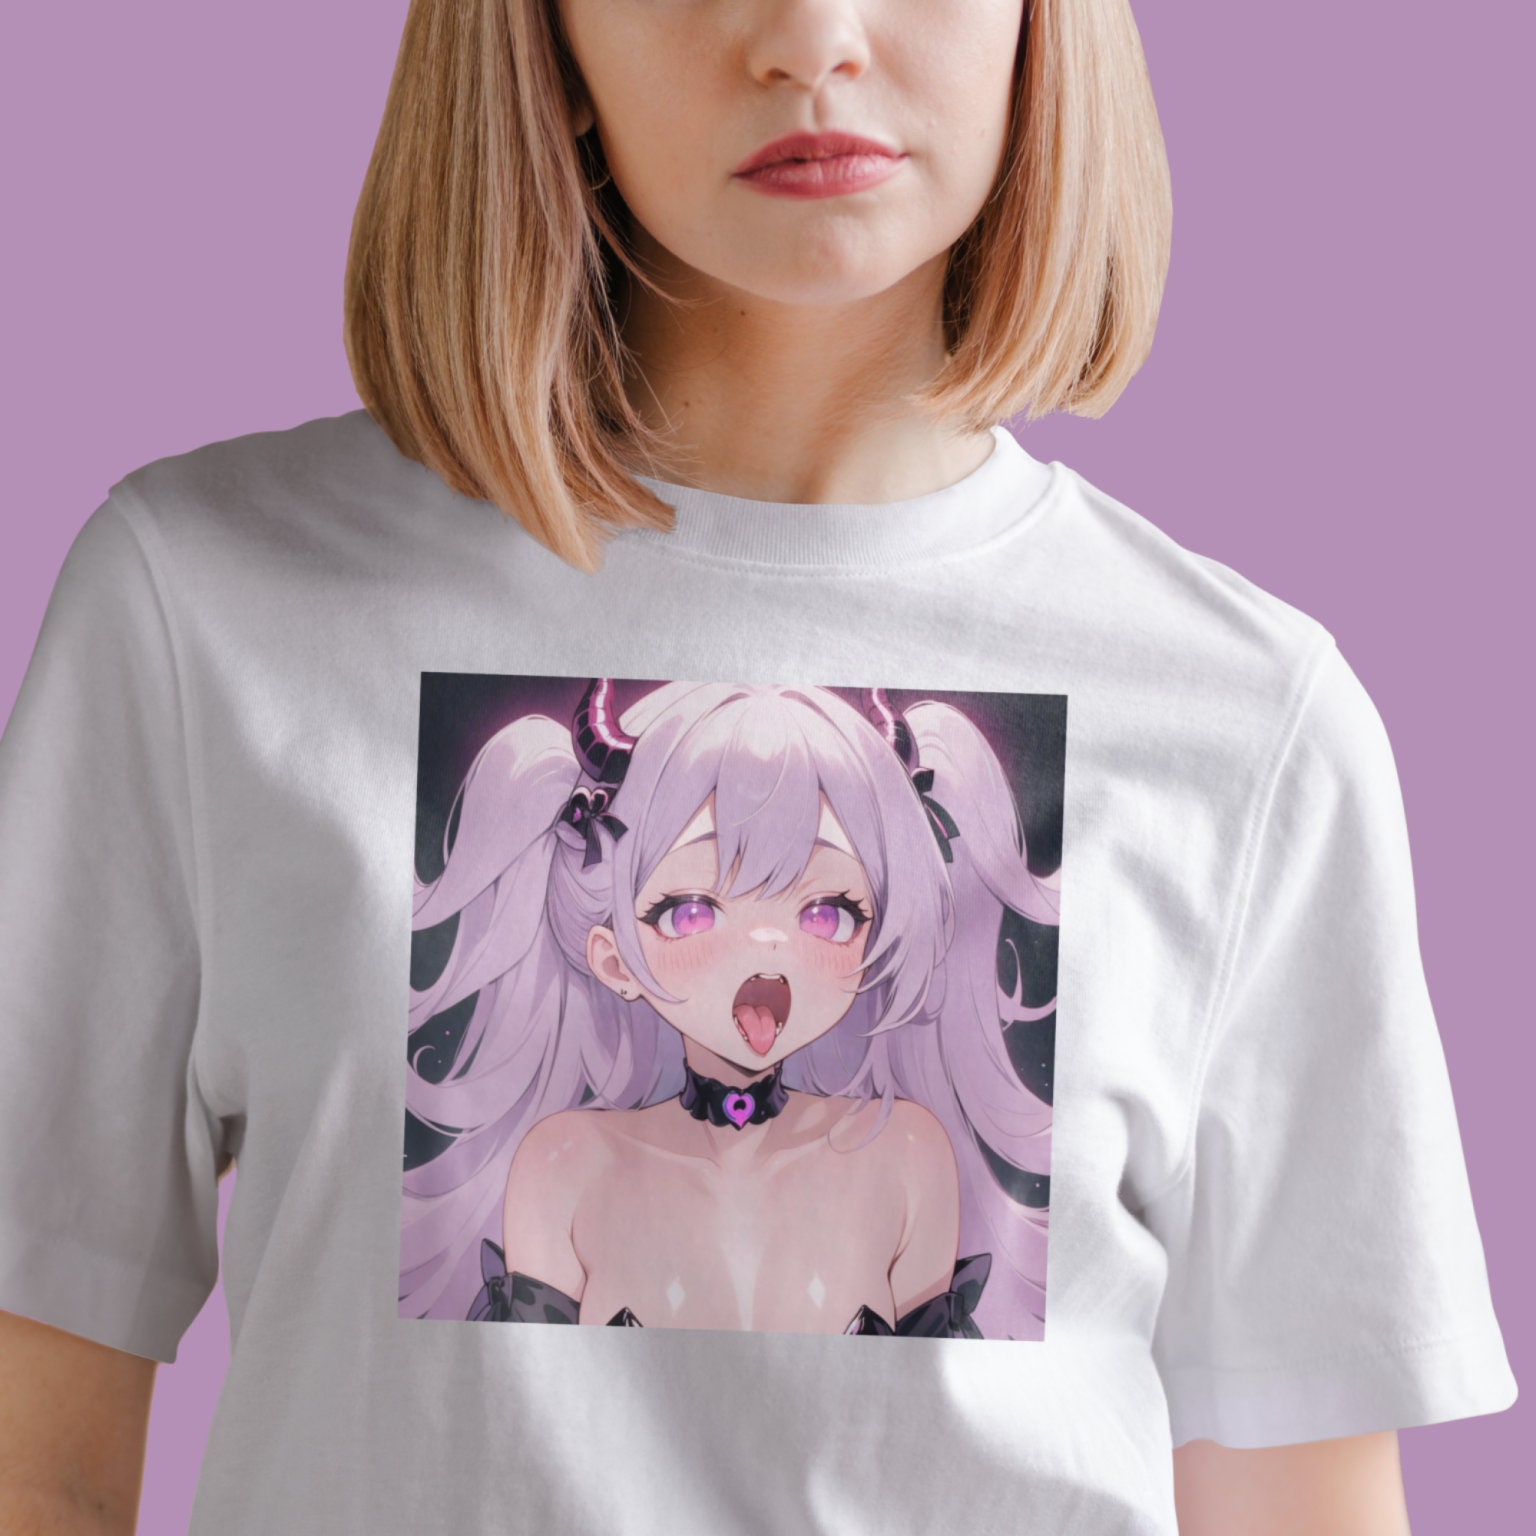 Ahegao Anime Girl Vampire Gothic Nugoth Goth Short-Sleeve Unisex T-Shirt